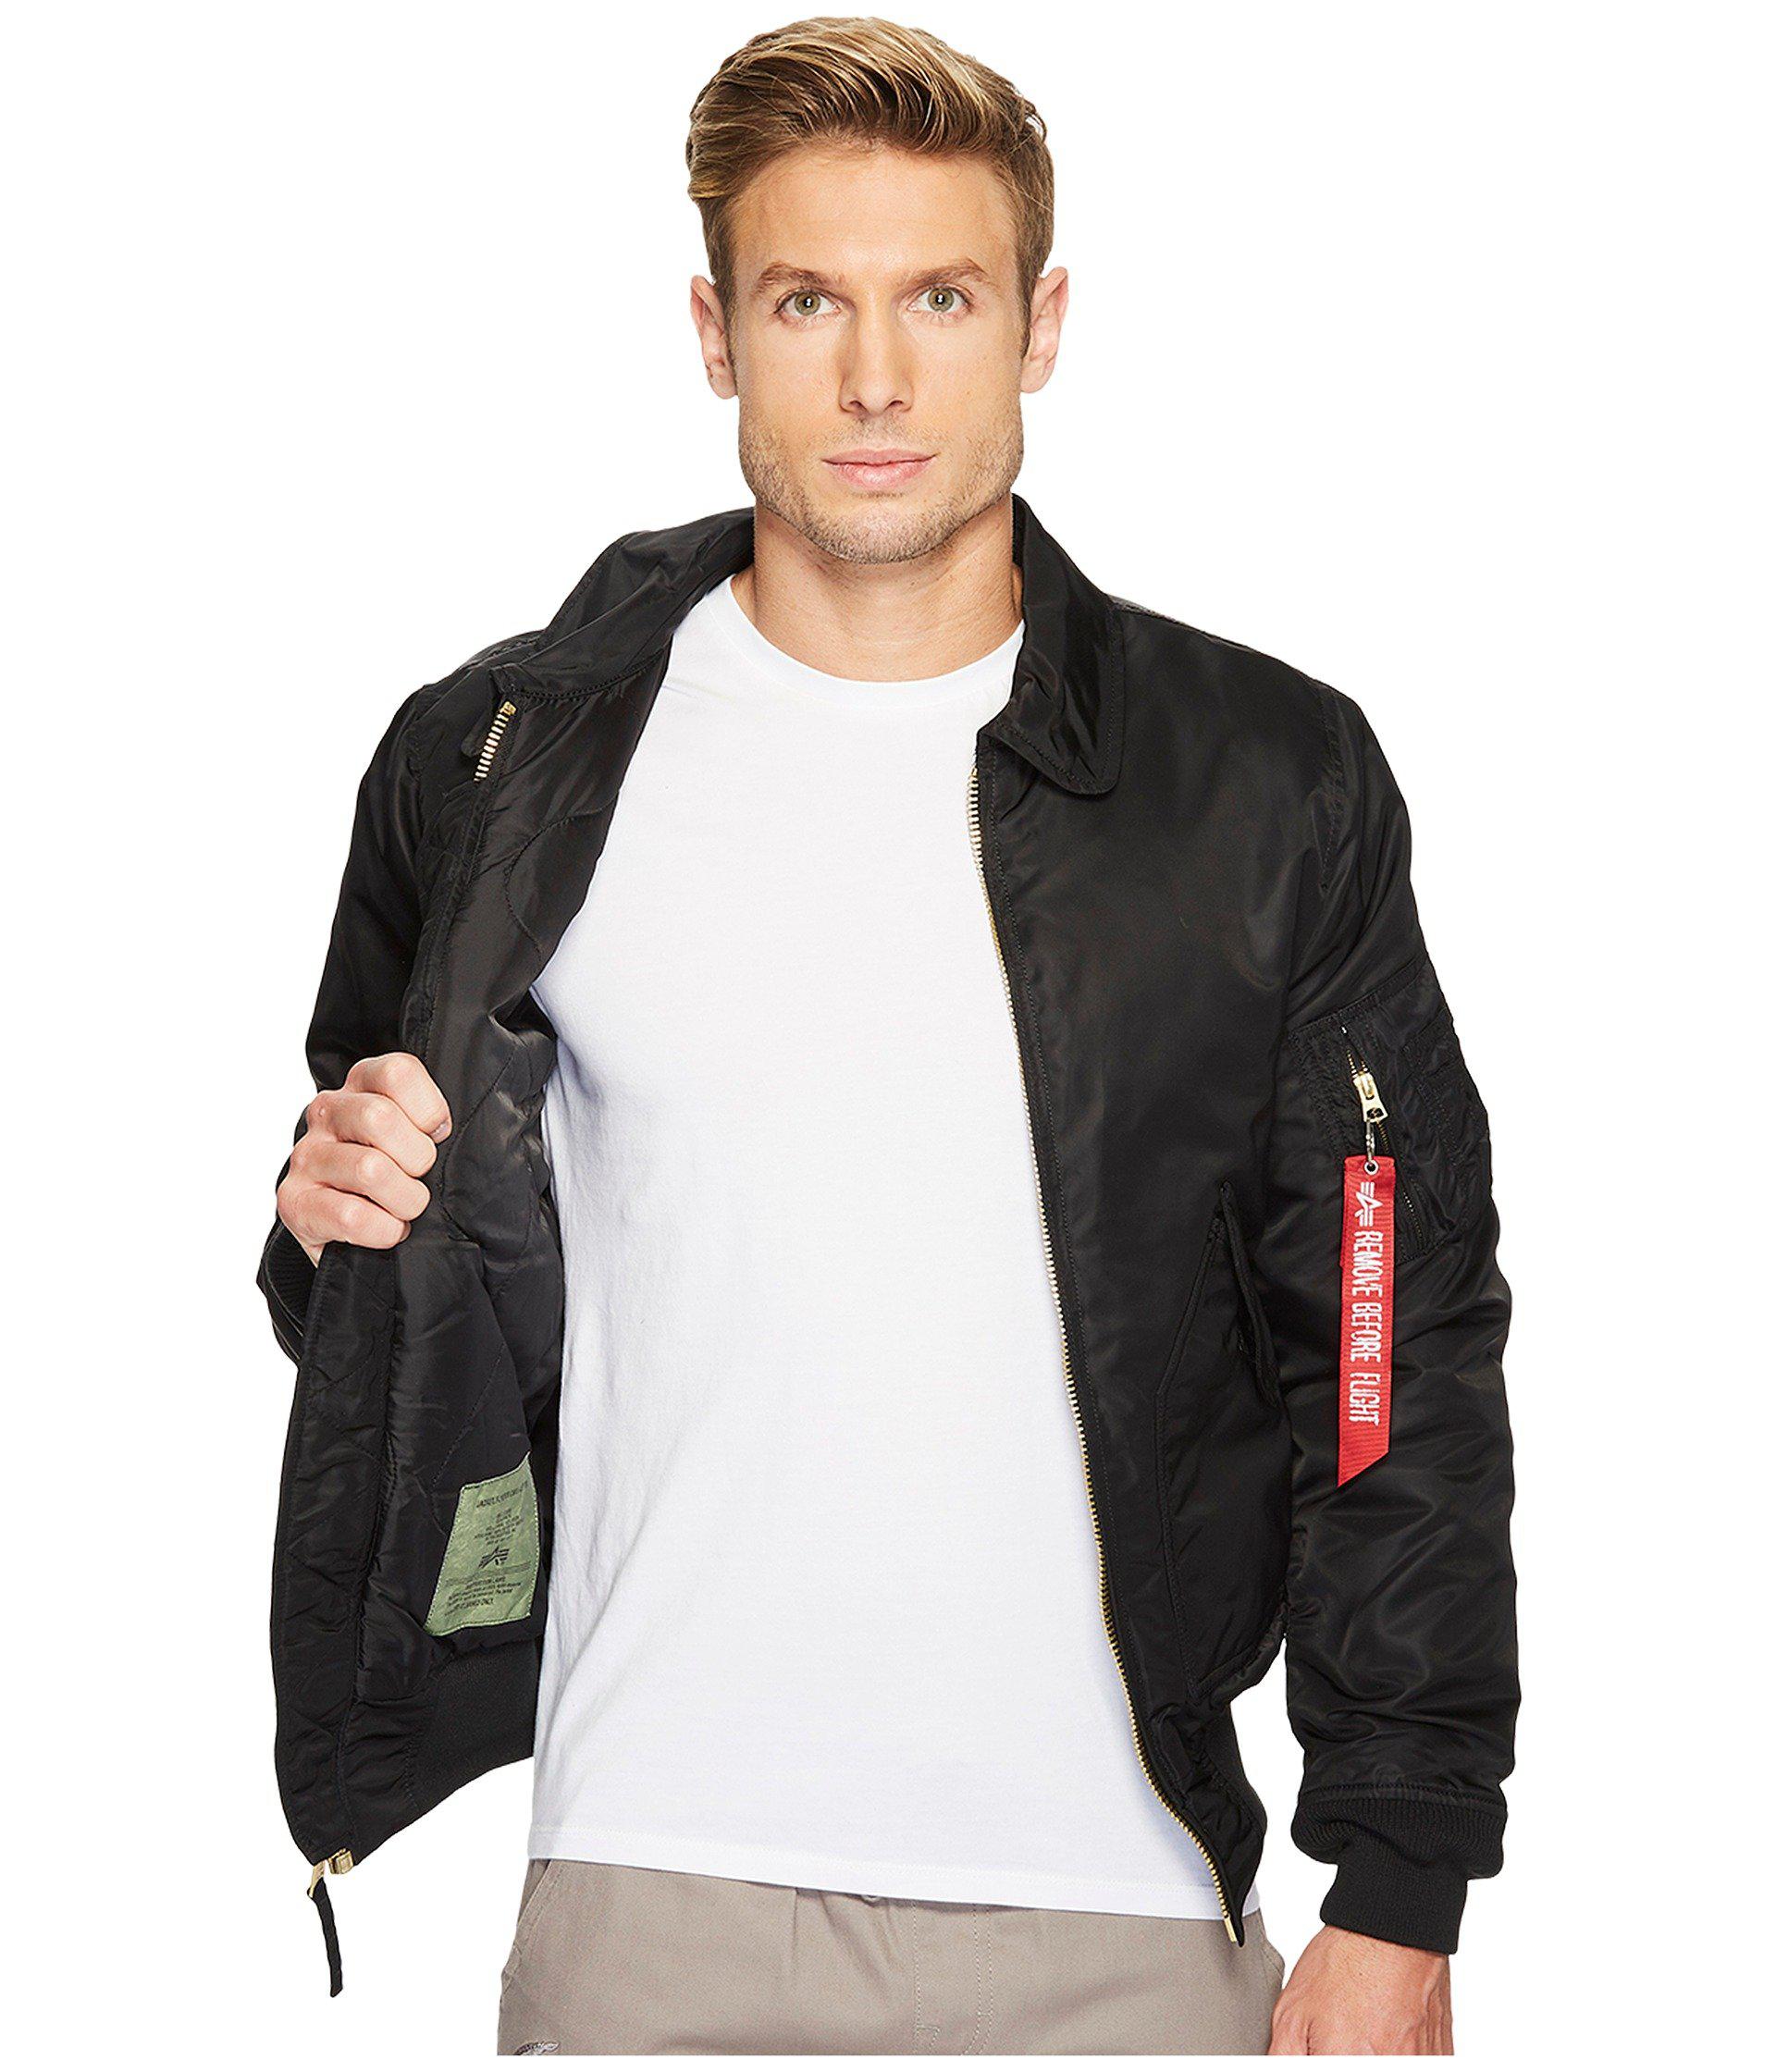 Lyst - Alpha Industries Cwu 45/p Slim Fit Jacket in Black for Men